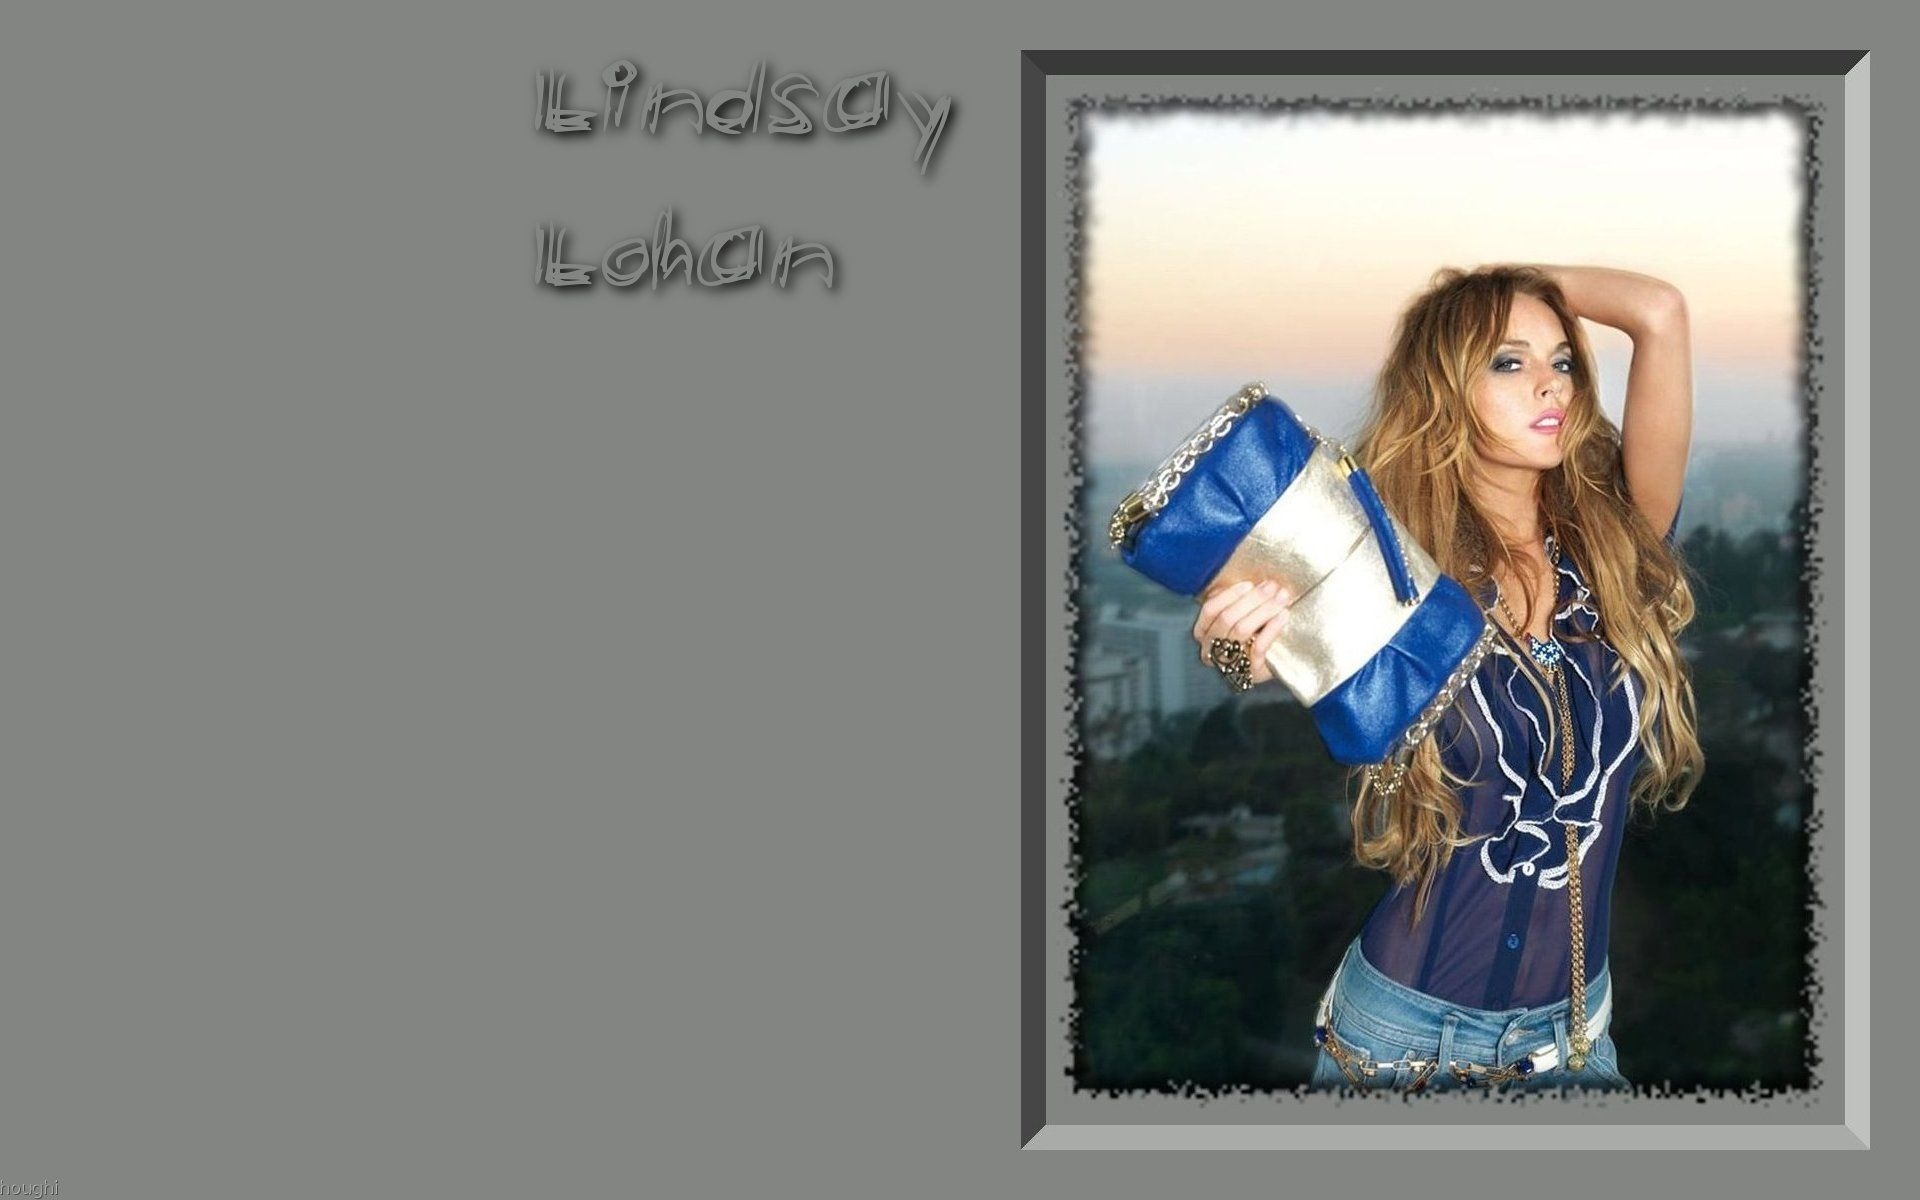 Lindsay Lohan beautiful wallpaper #18 - 1920x1200